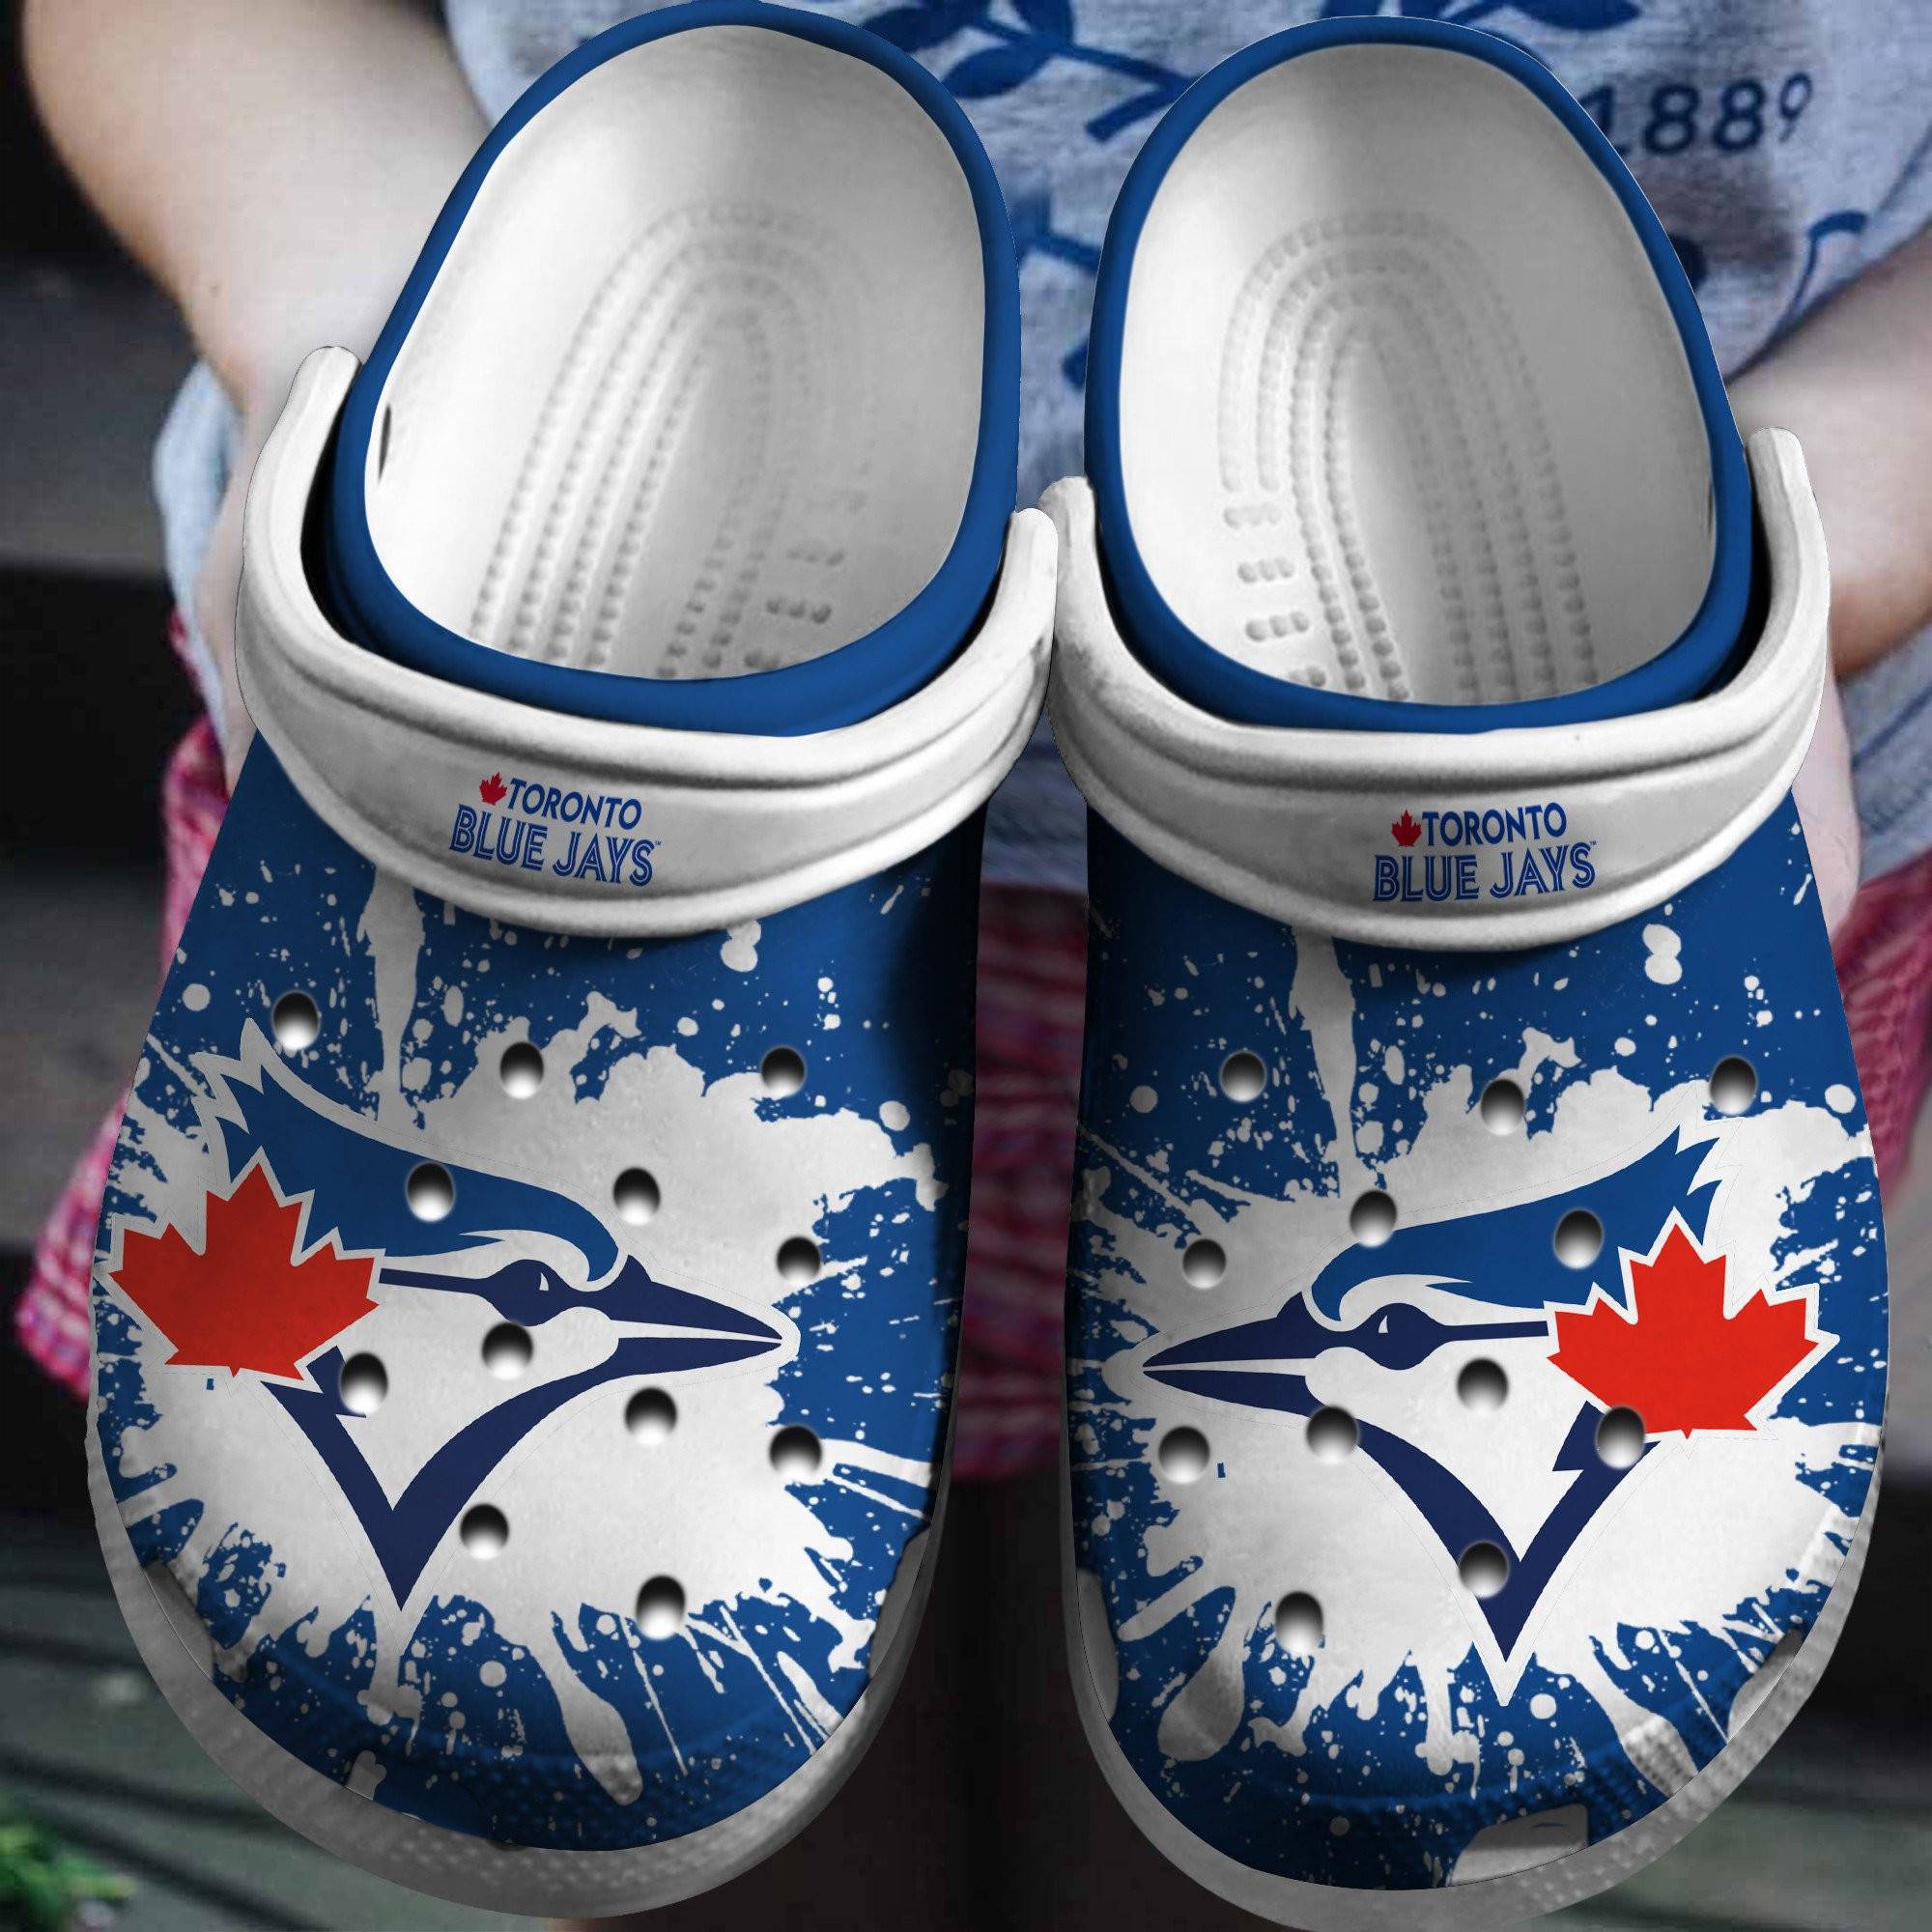 Hot Mlb Team Toronto Blue Jays Blue – White Crocss Clog Shoesshoes